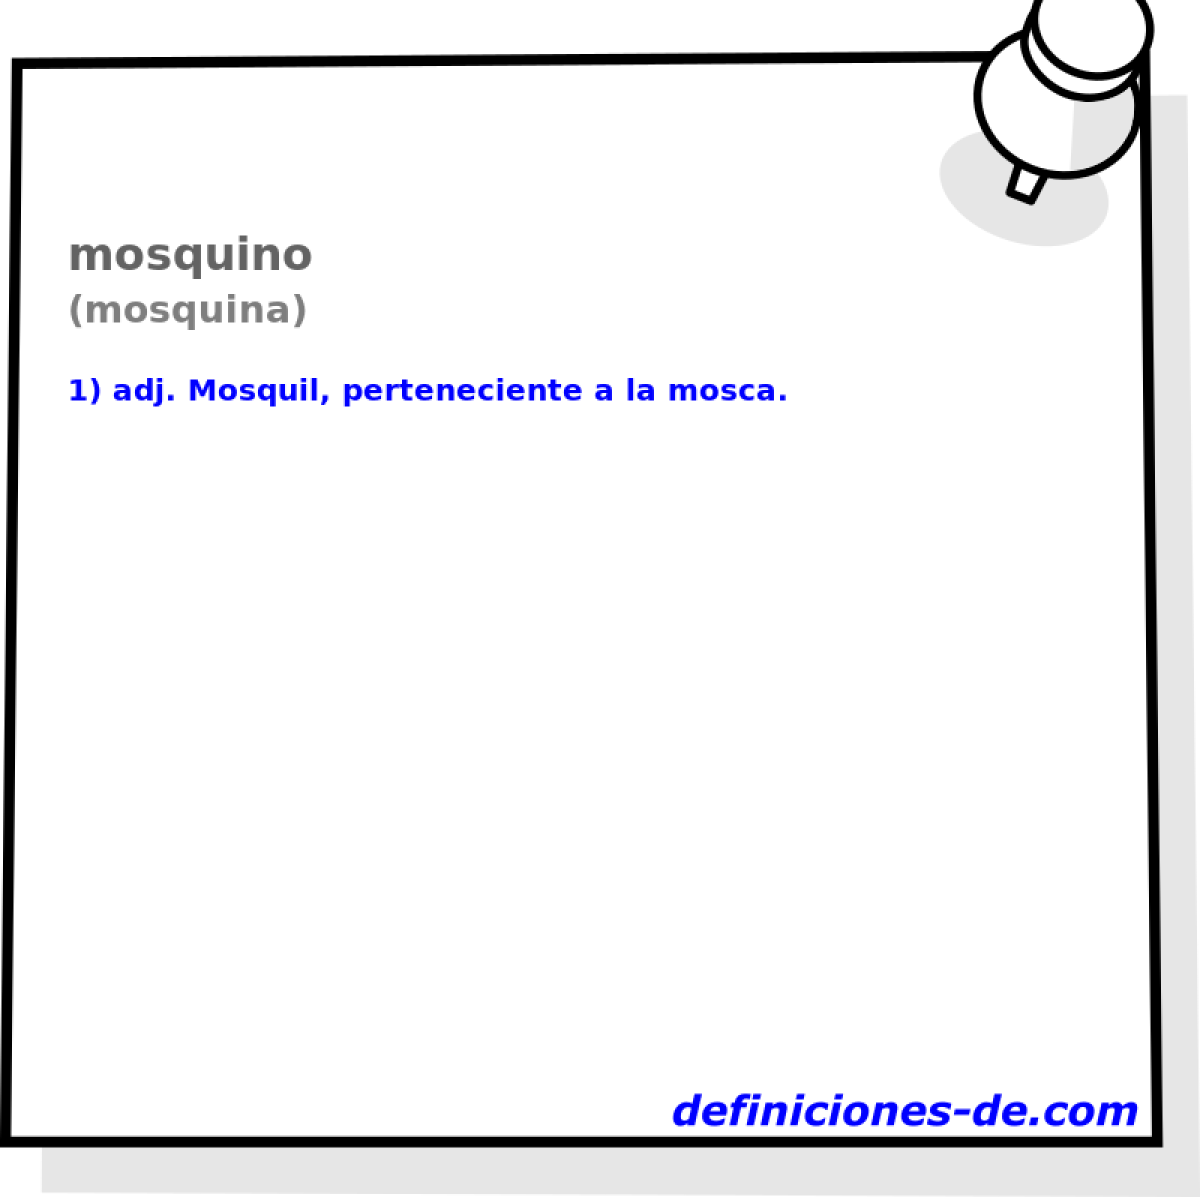 mosquino (mosquina)